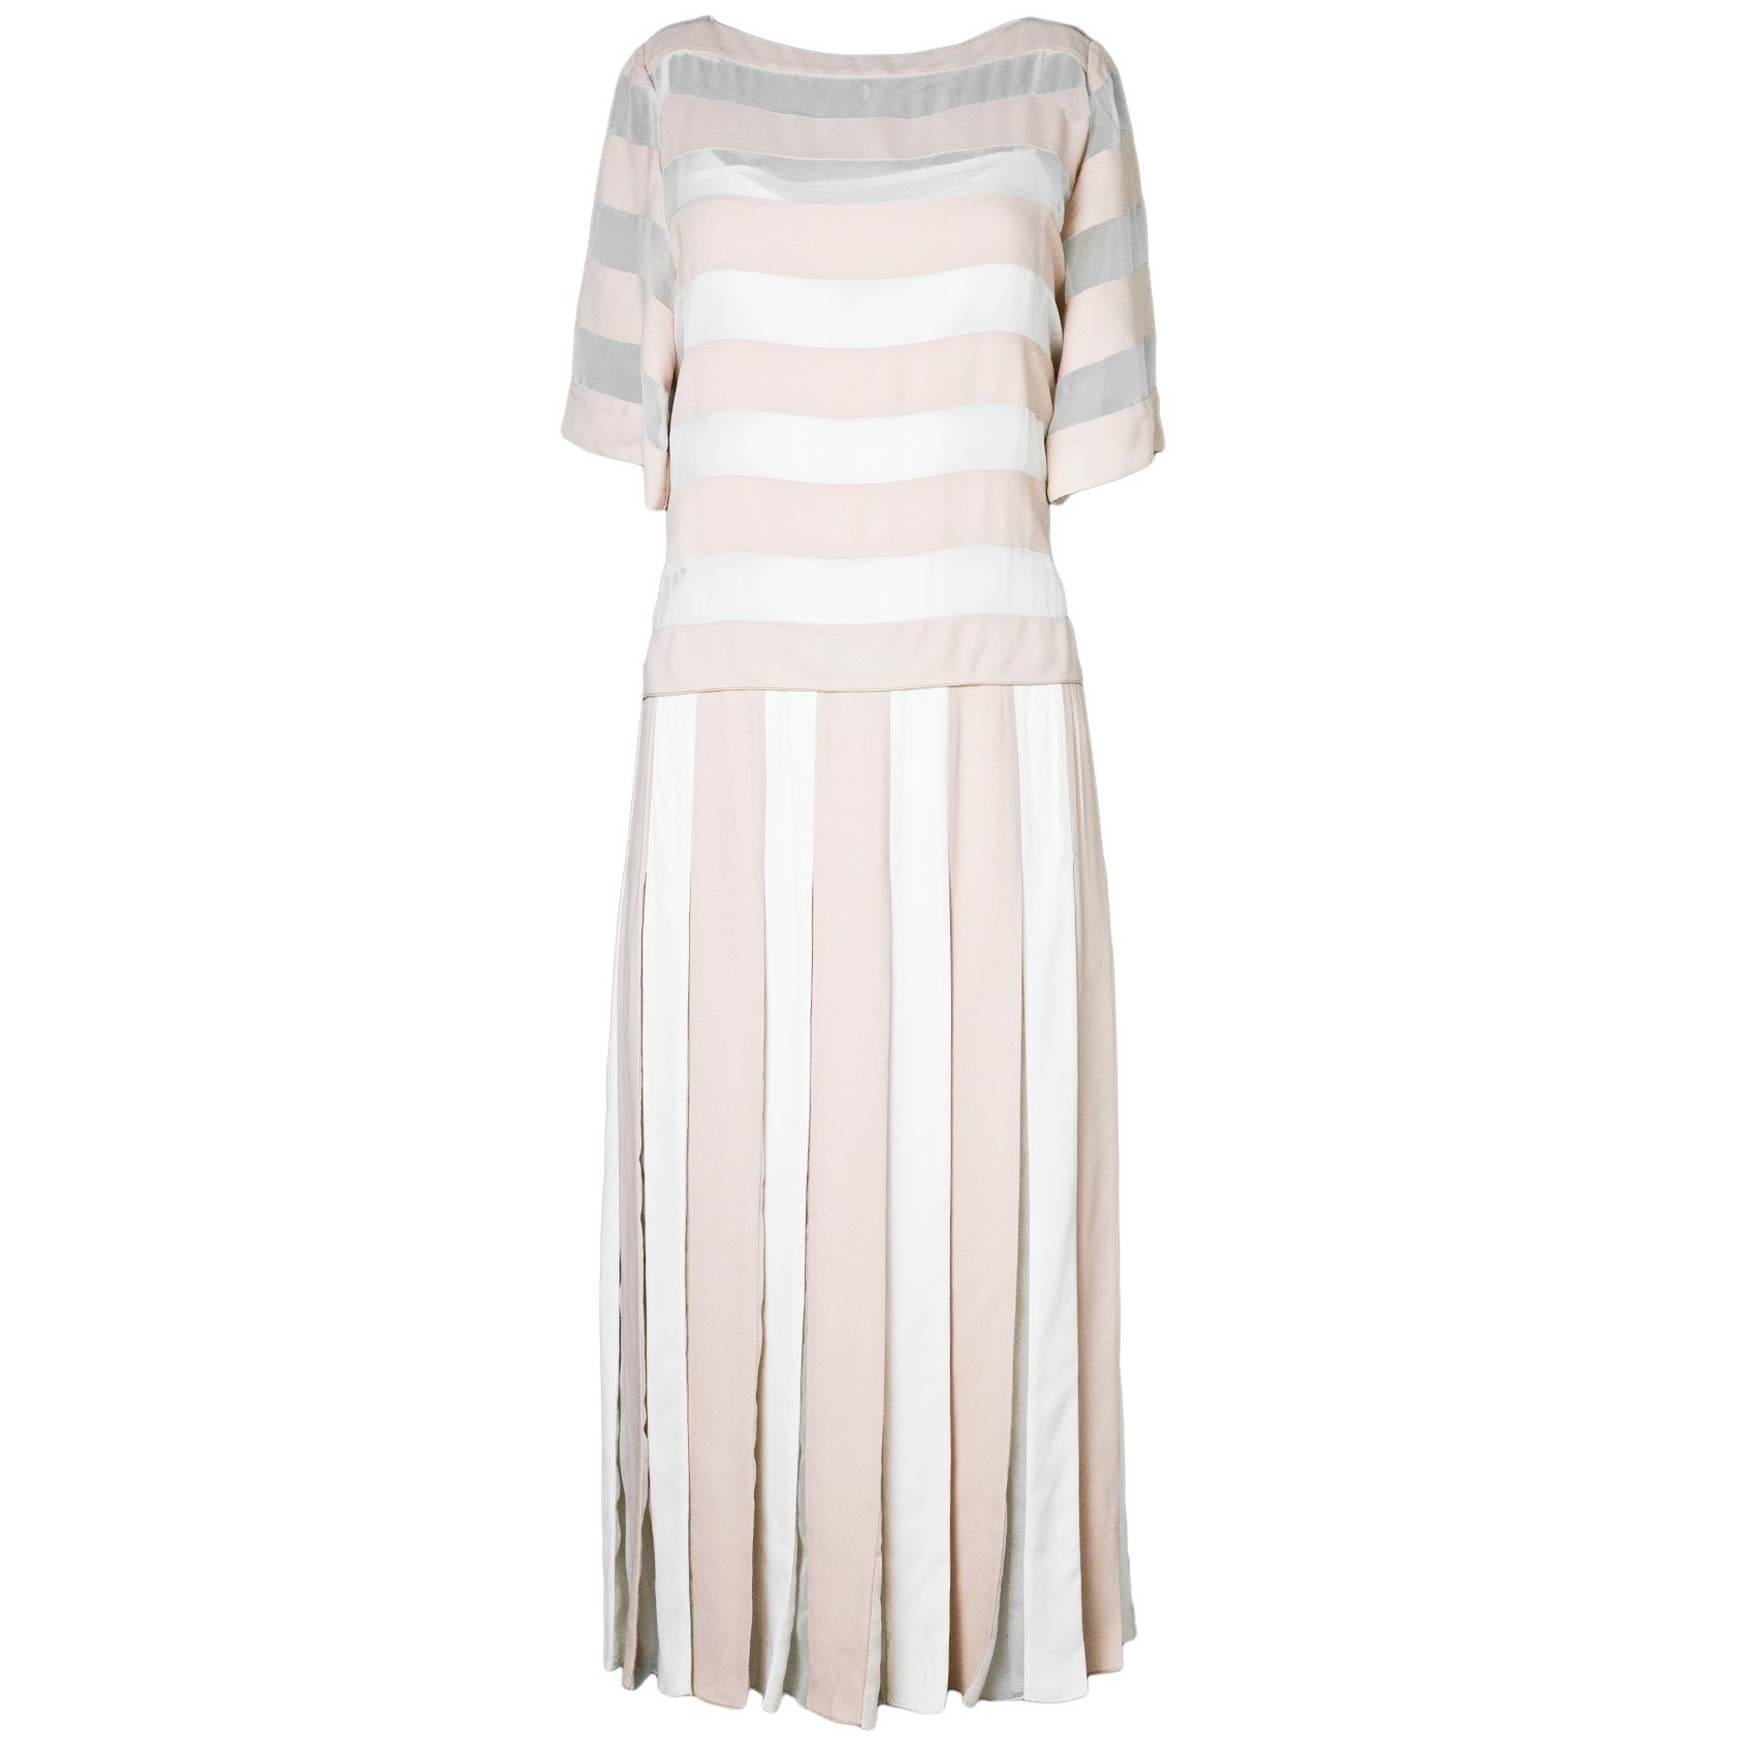 Marc Jacobs Blush & Ivory Stripe Pleated Dress Sz 8